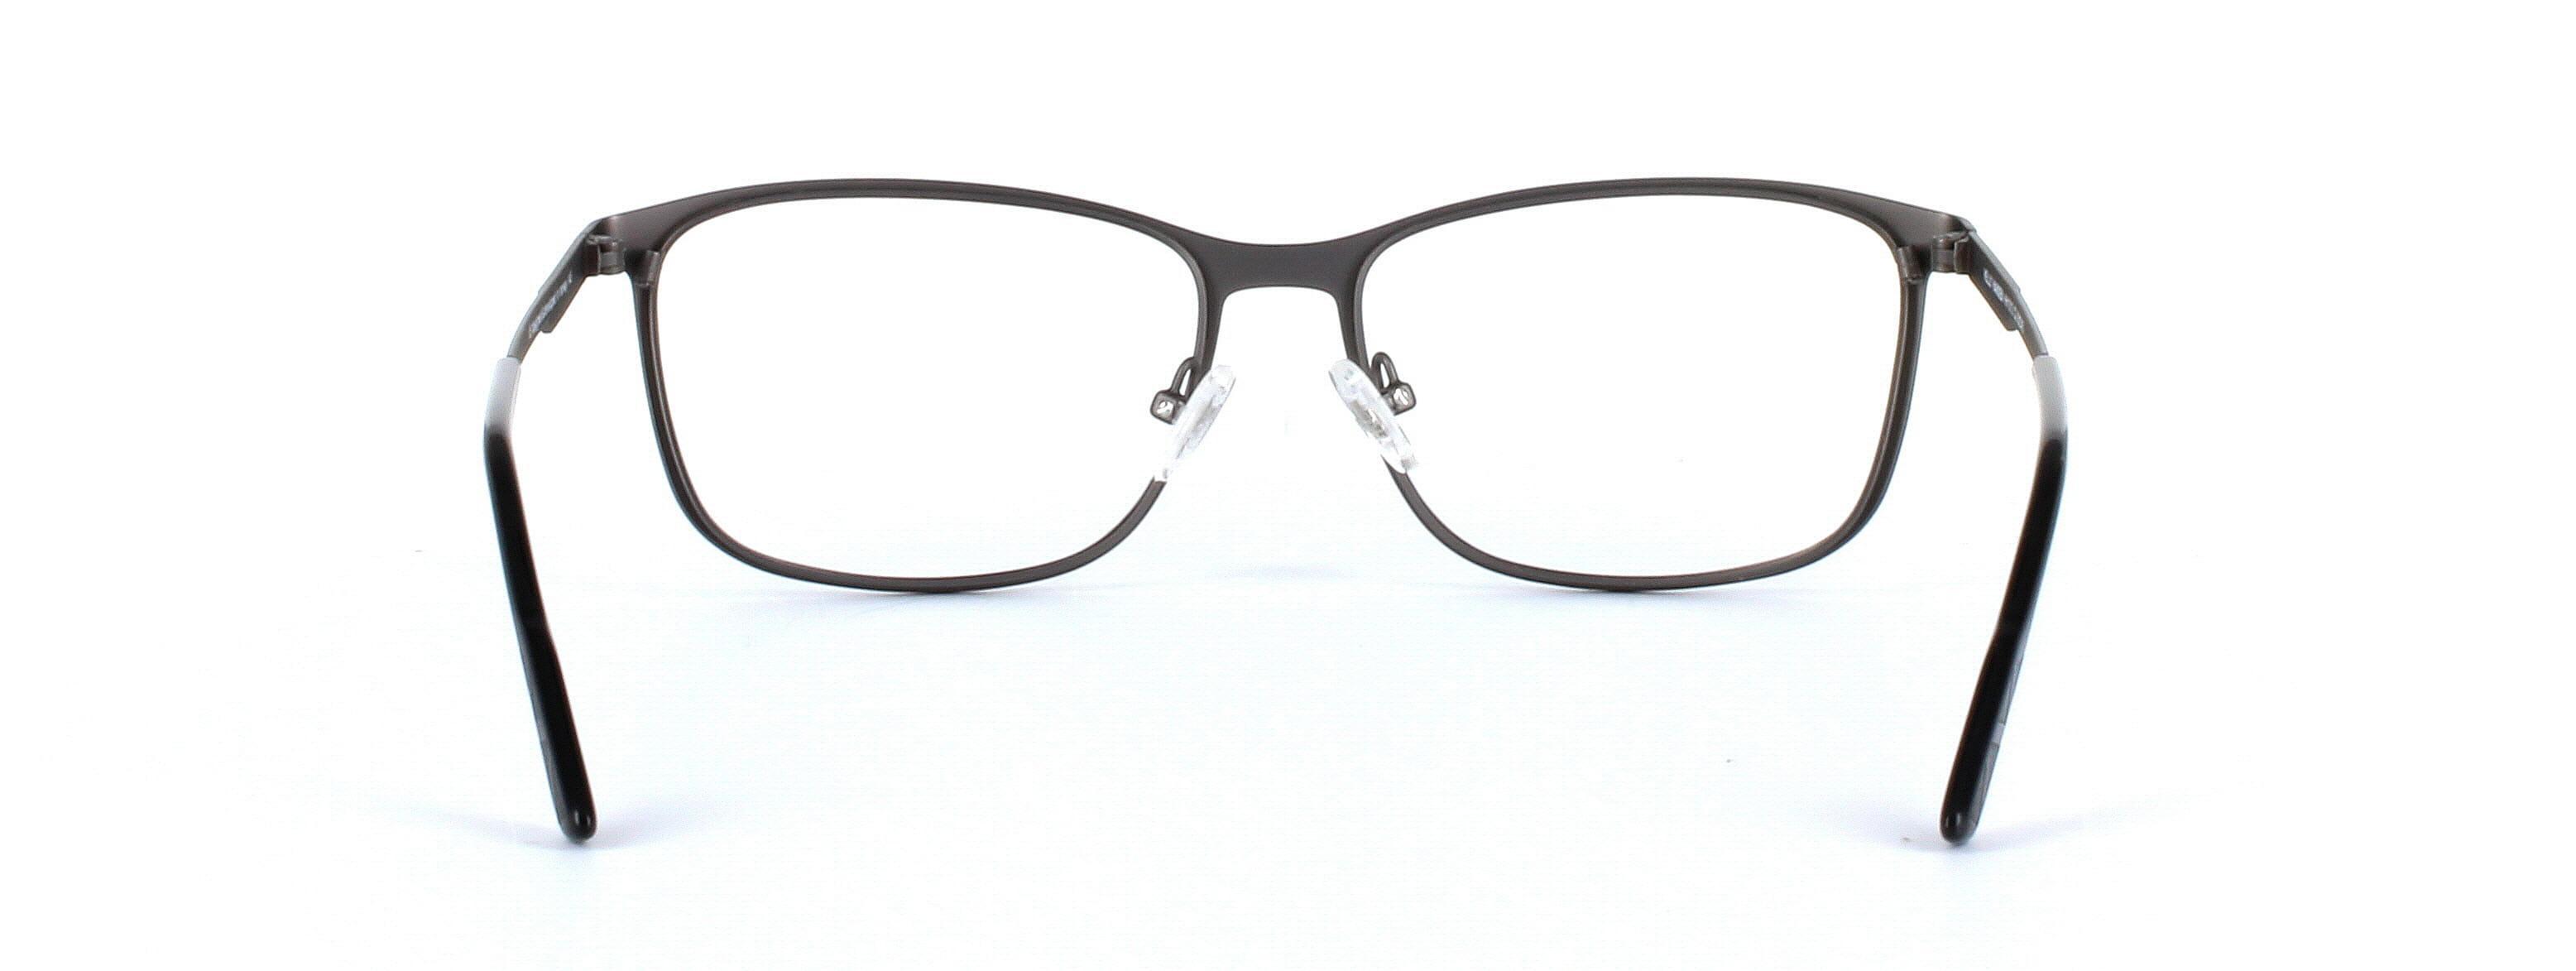 Helly Hansen HH 1013 Brown Full Rim Rectangular Square Metal Glasses - Image View 3